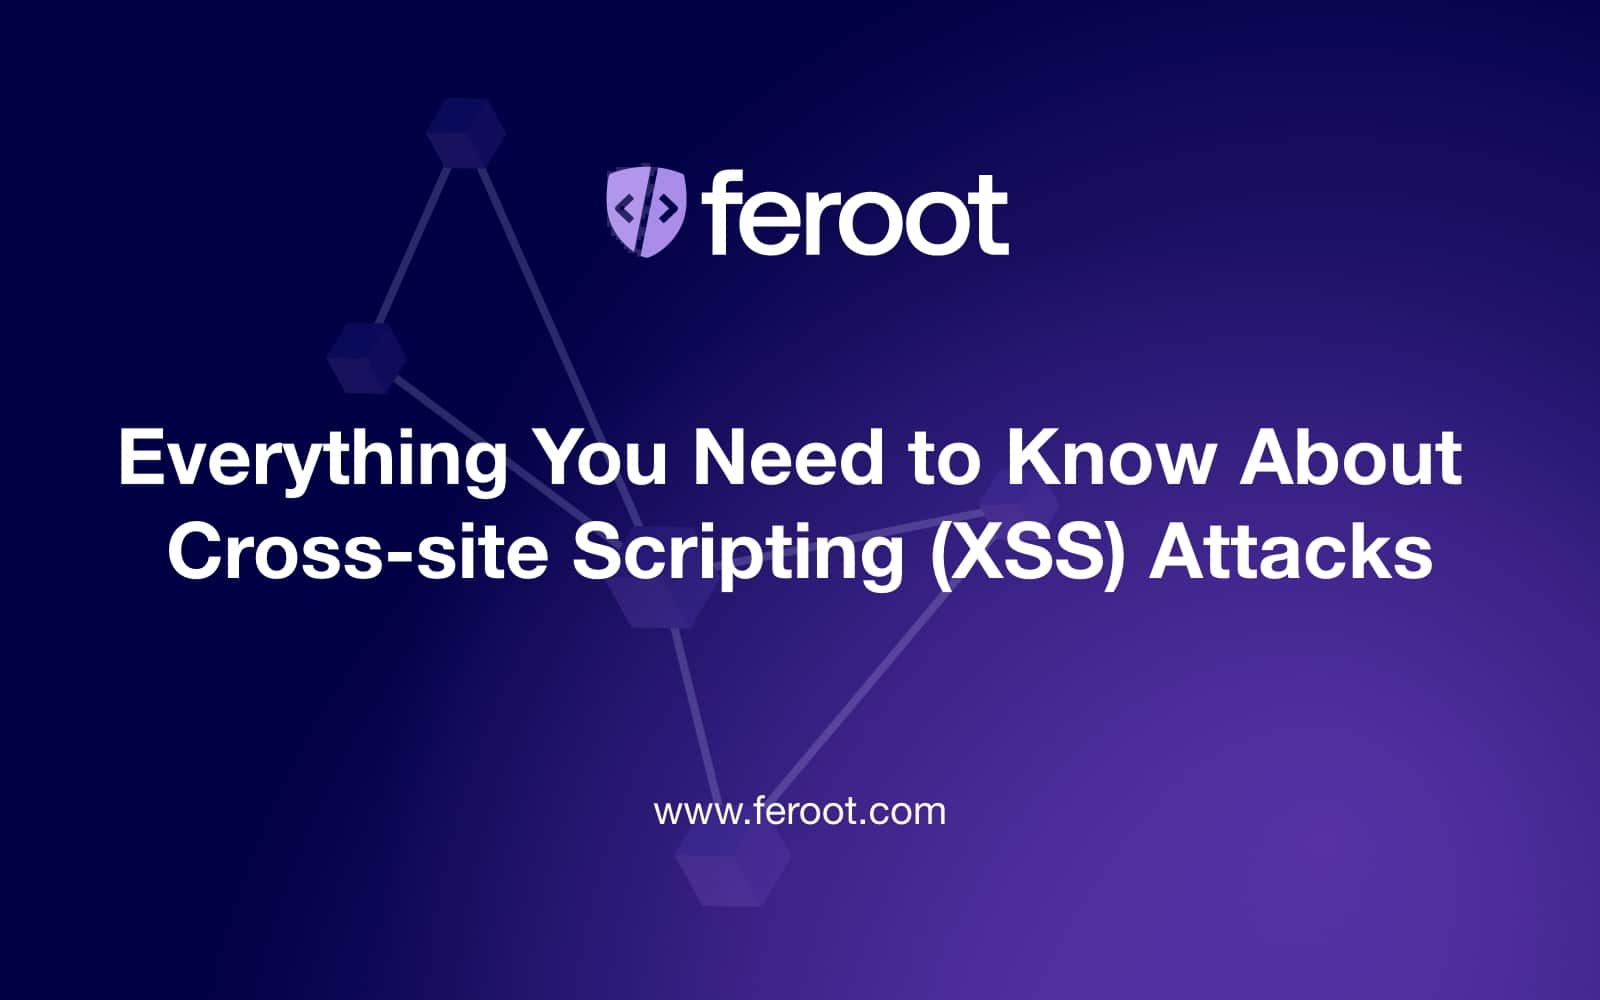 Cross-site Scripting (XSS) Attacks